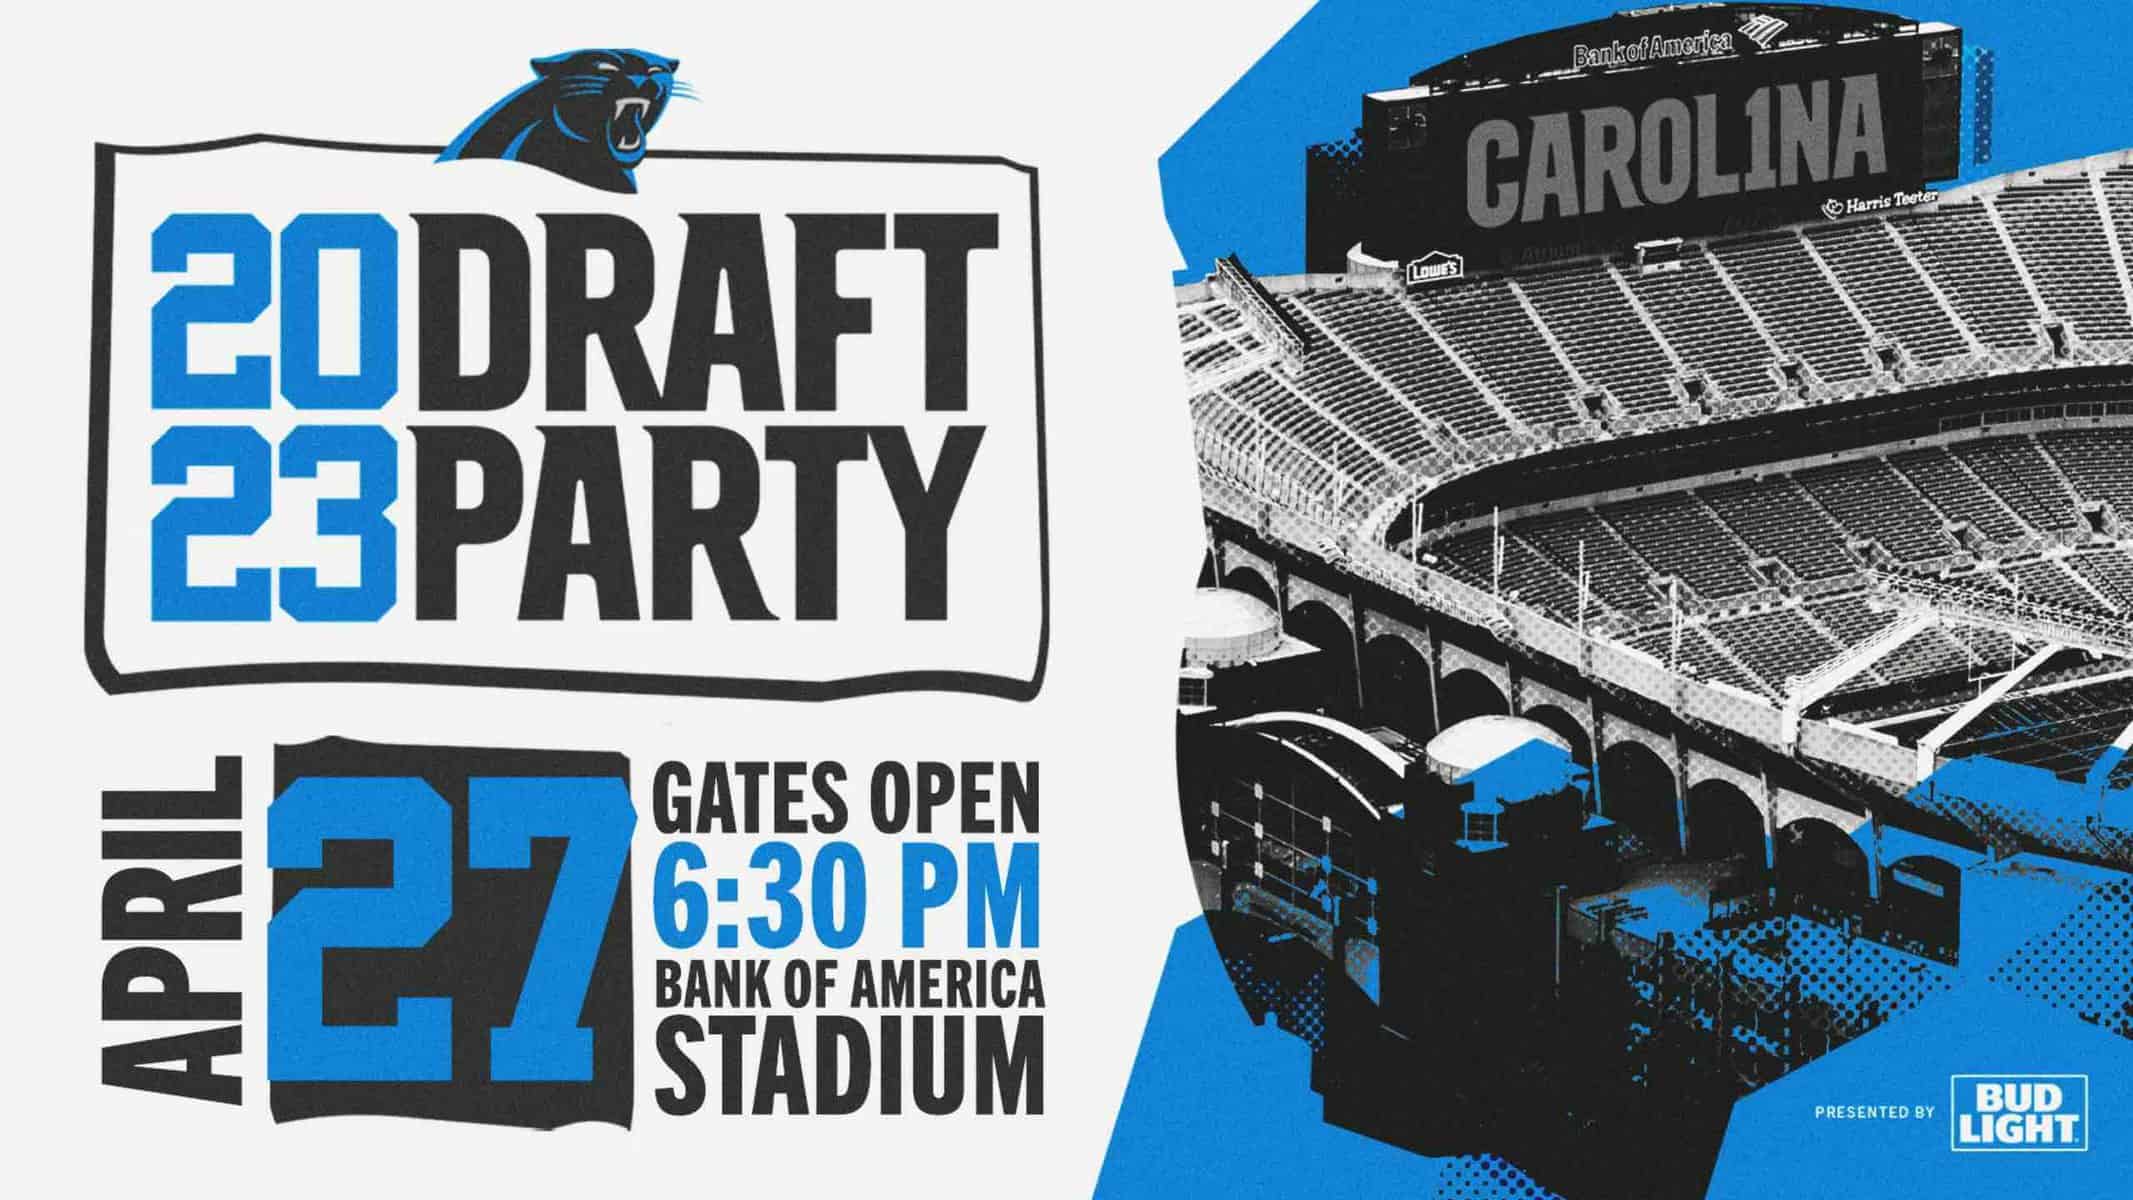 Carolina Panthers Hosting Draft Party at Bank of America Stadium